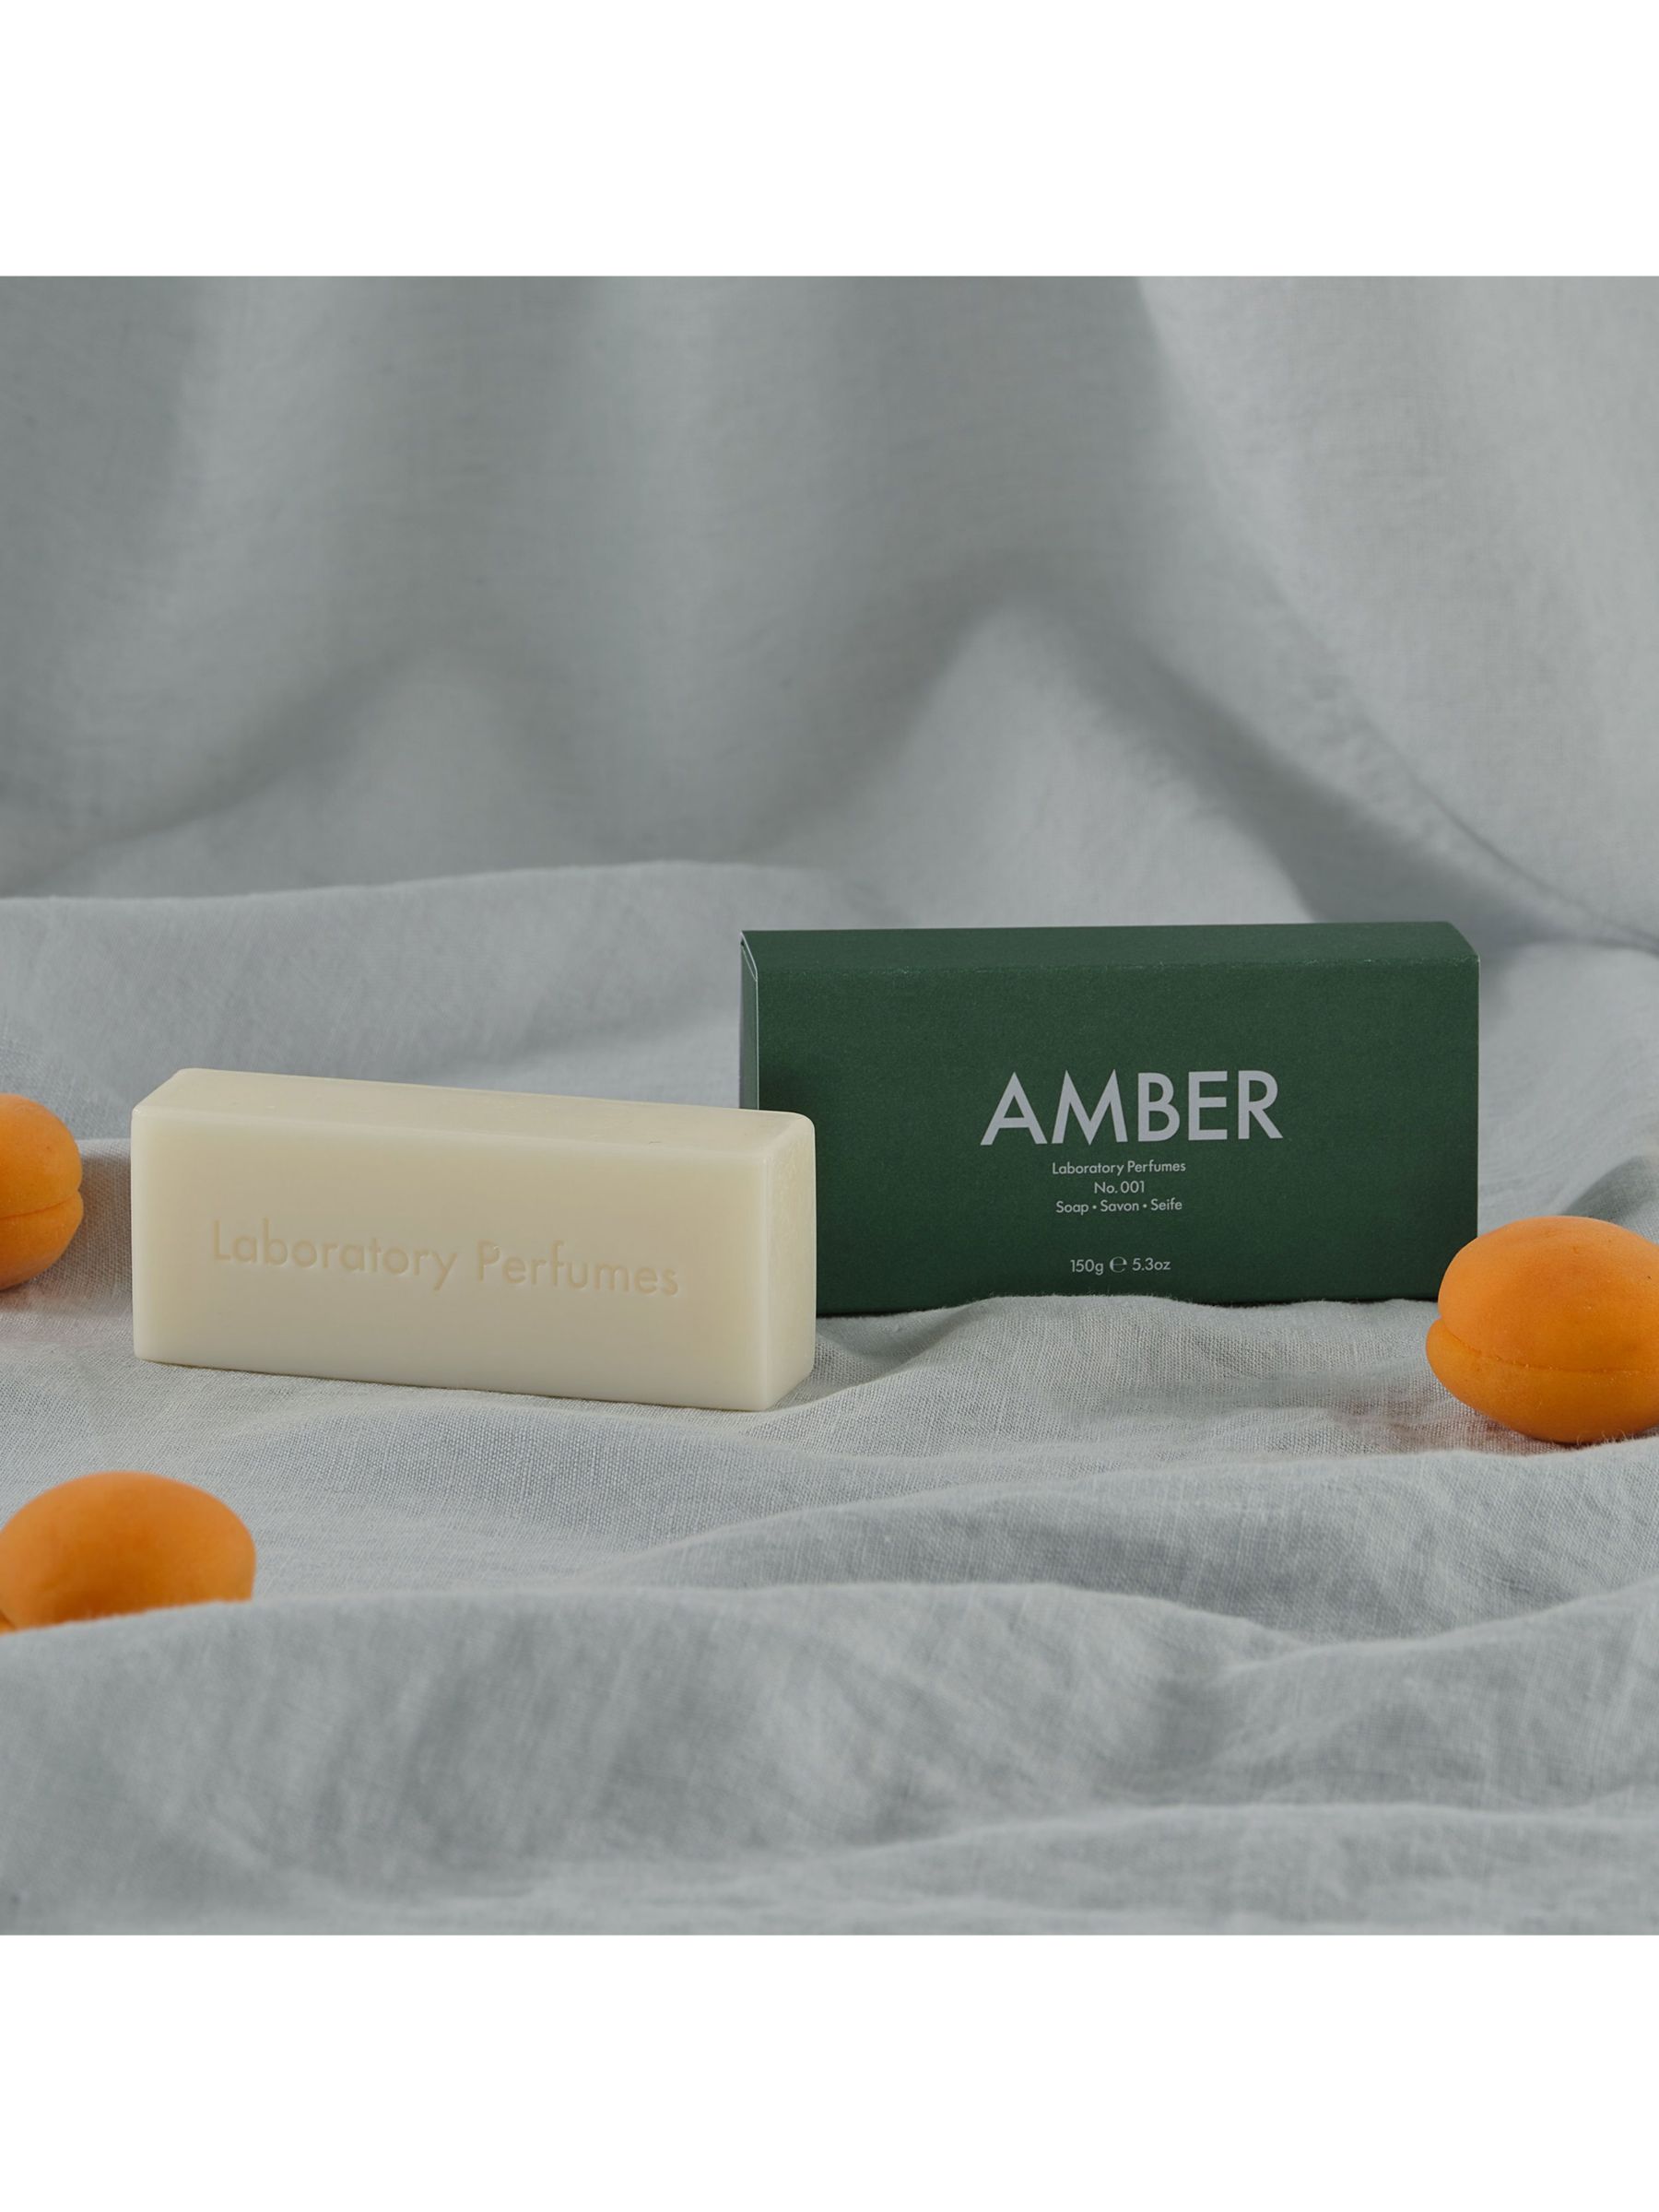 Laboratory Perfumes Amber Soap, 150g 2